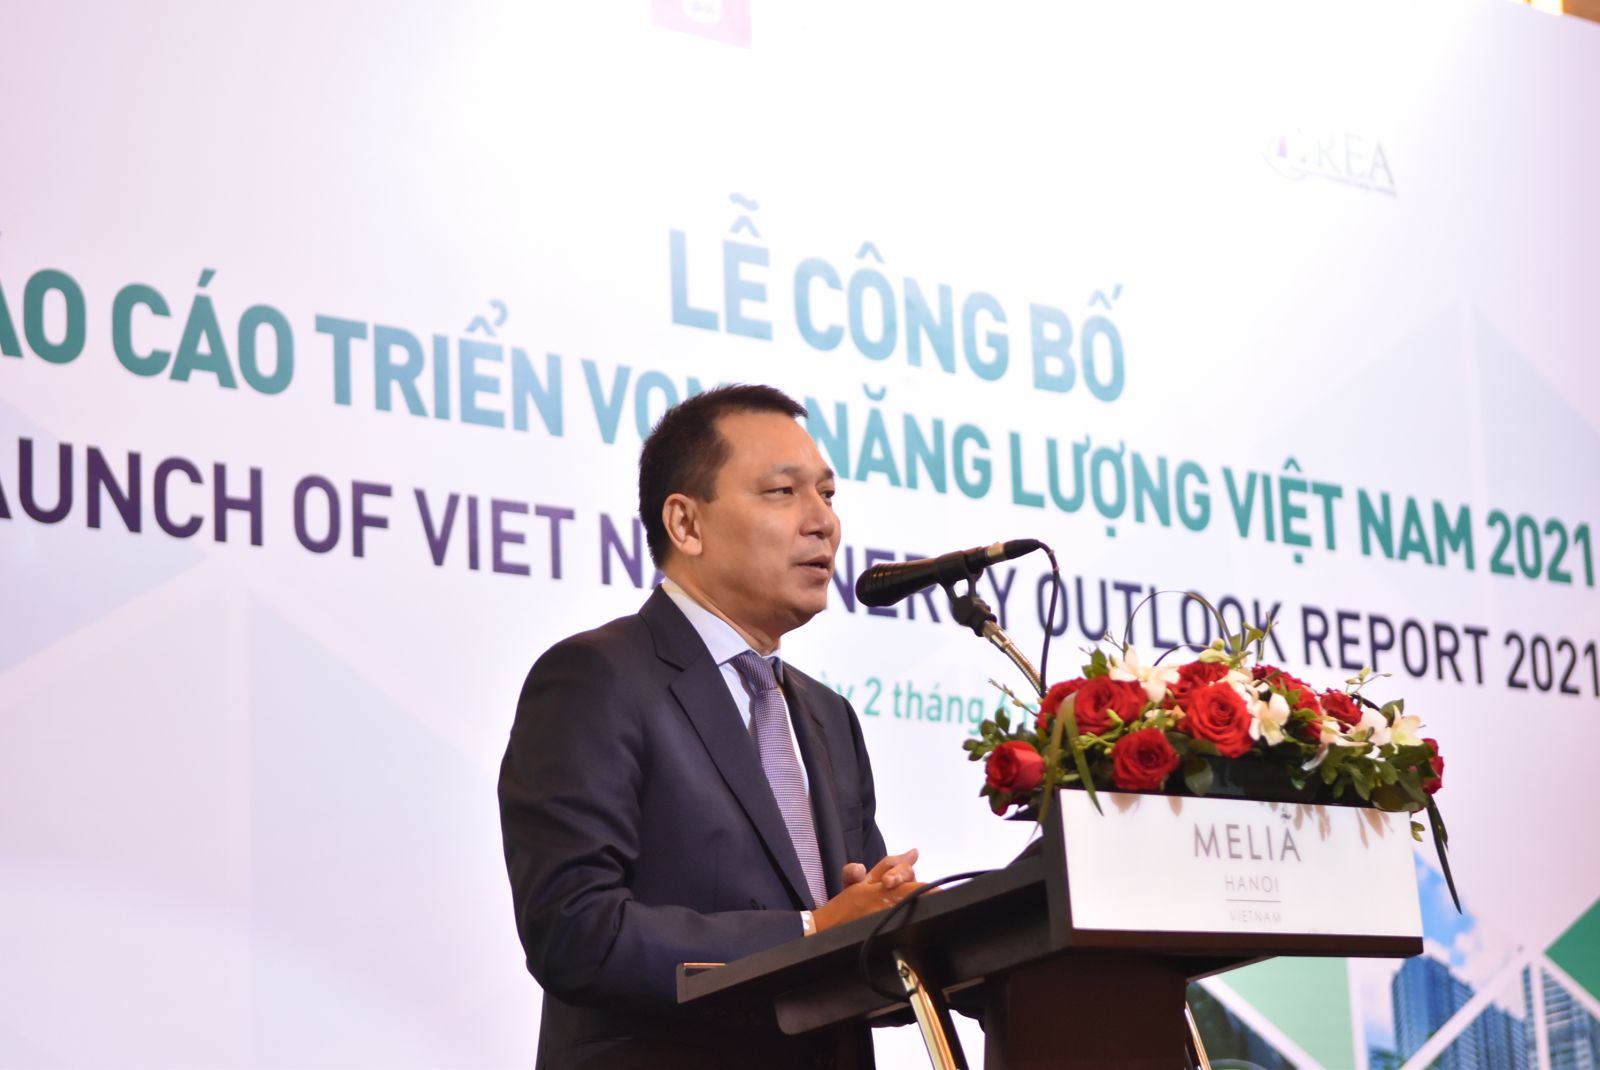 Vietnam Energy Outlook Report 2021 launched